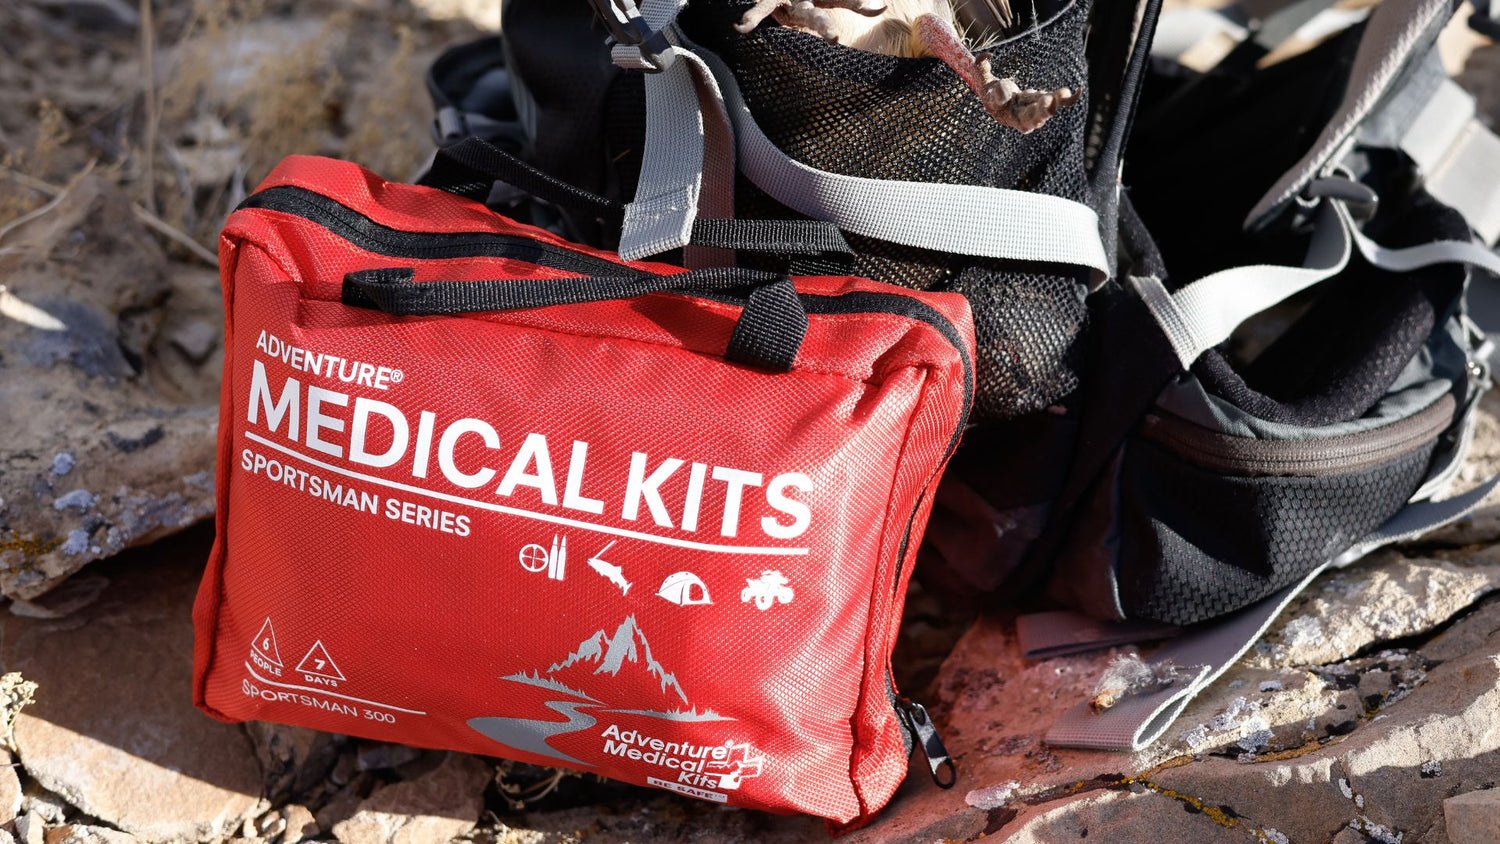 Sportsman Series Medical Kit on ground